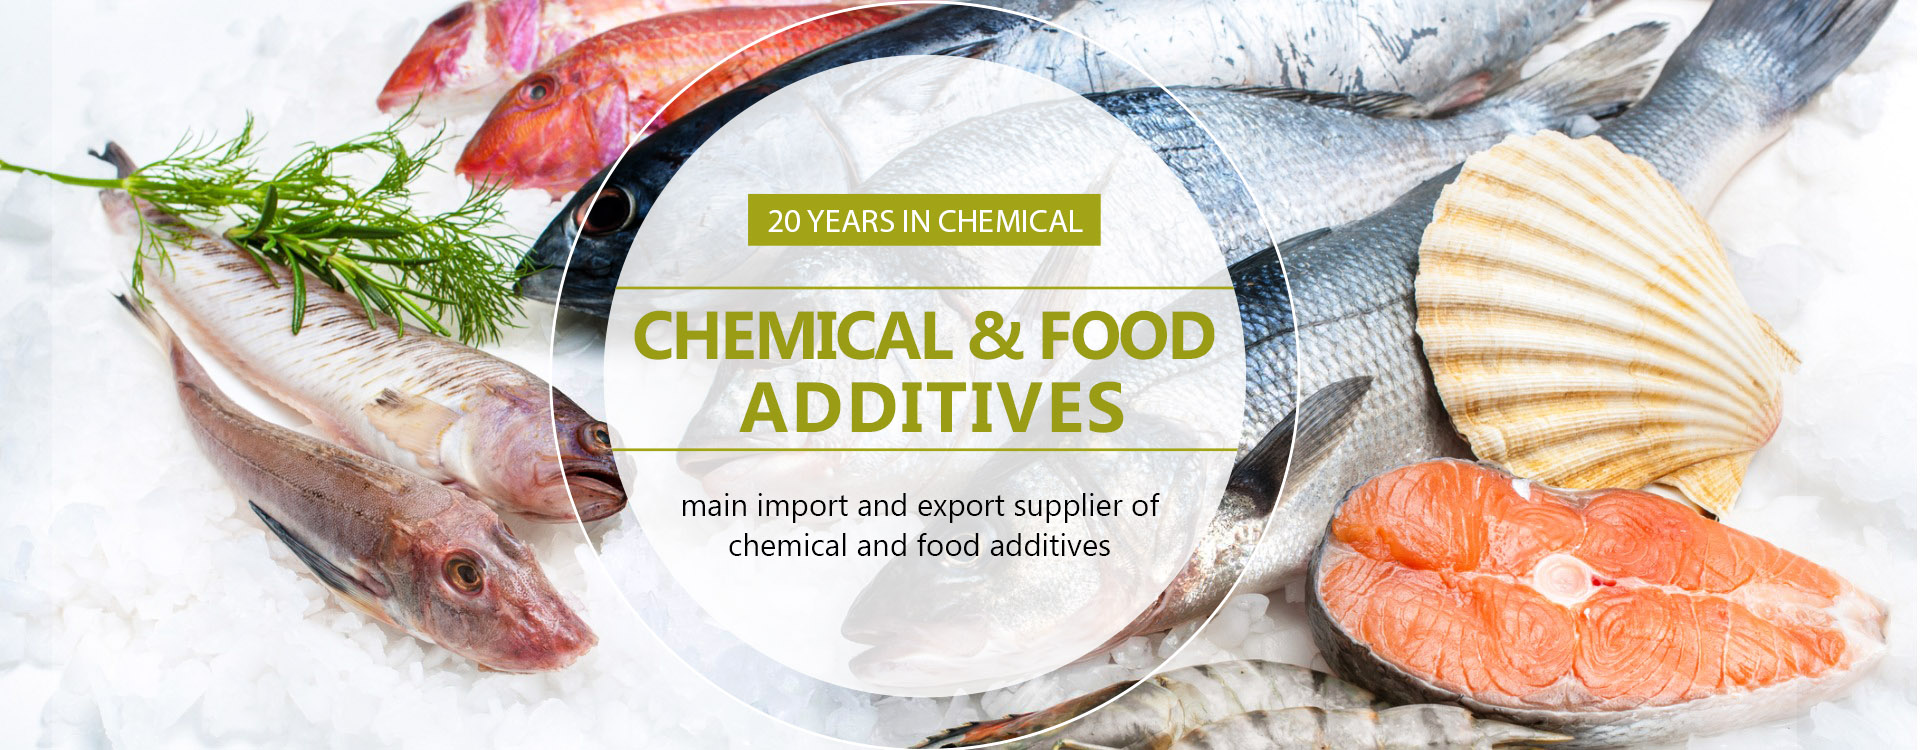 Seafood additives<br />Aquatic additives<br />phosphate blend<br />Sodium tripolyphosphate for food